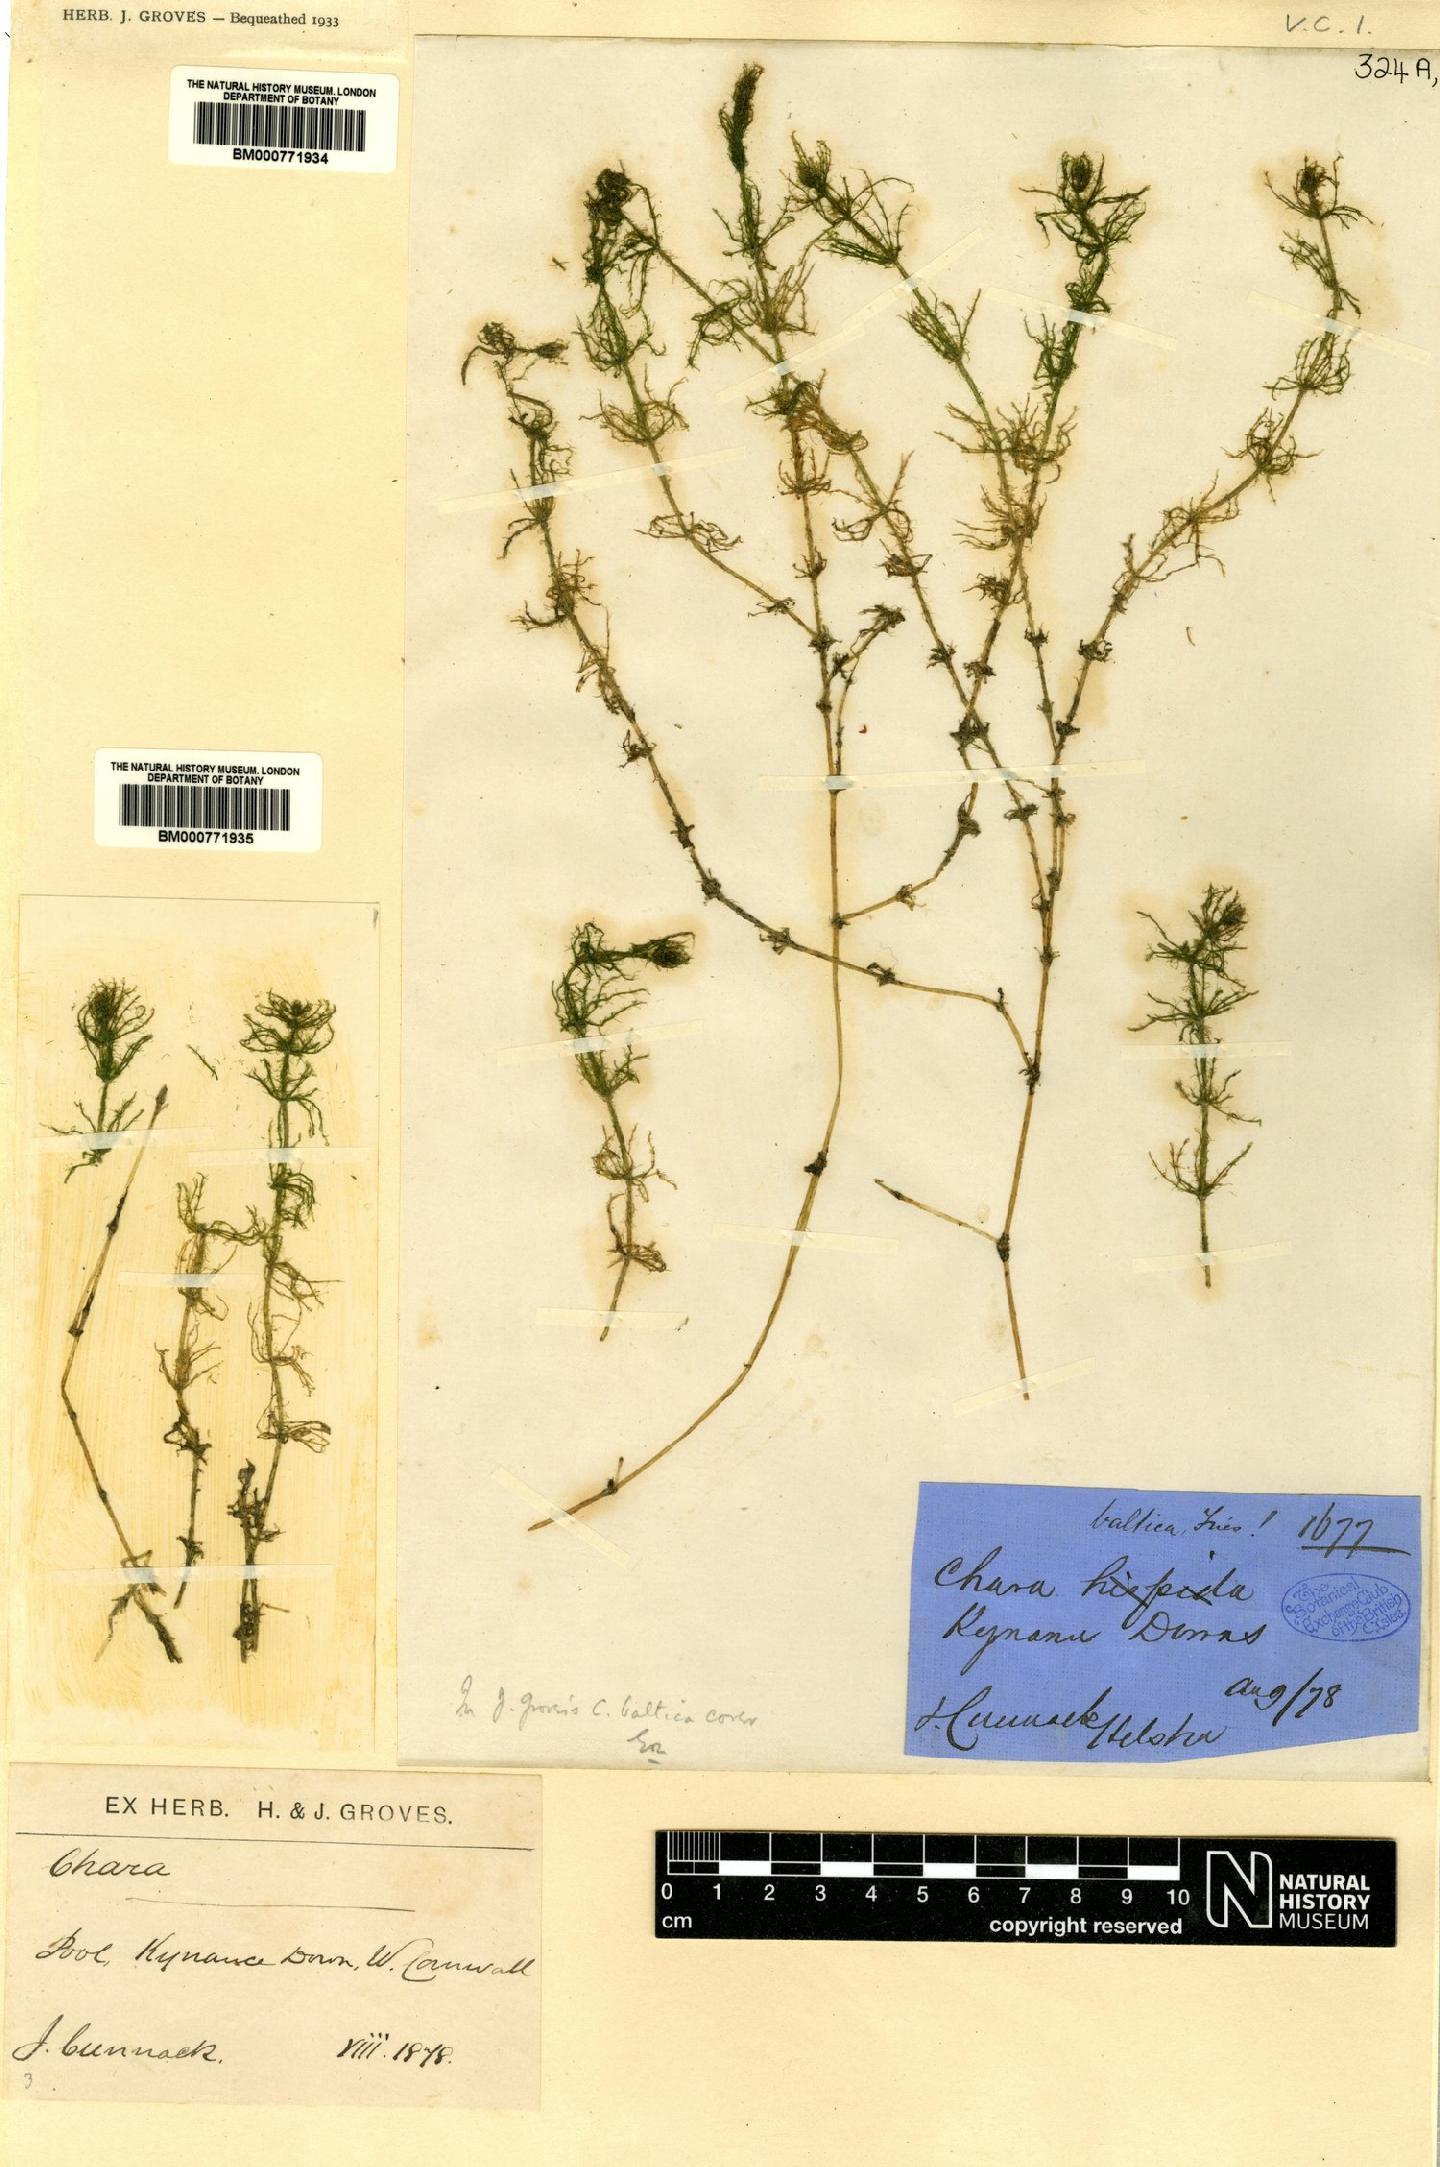 To NHMUK collection (Chara baltica var. affinis H.Groves & J.Groves; NHMUK:ecatalogue:8729598)